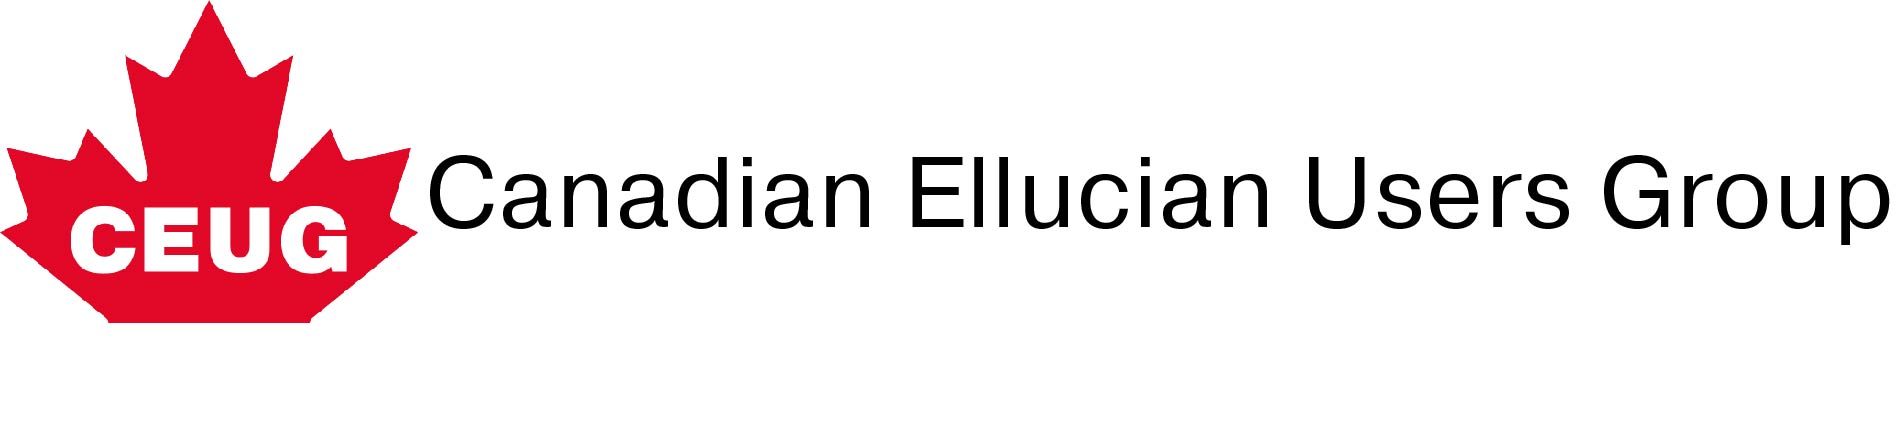 Canadian Ellucian Users Group (CEUG)